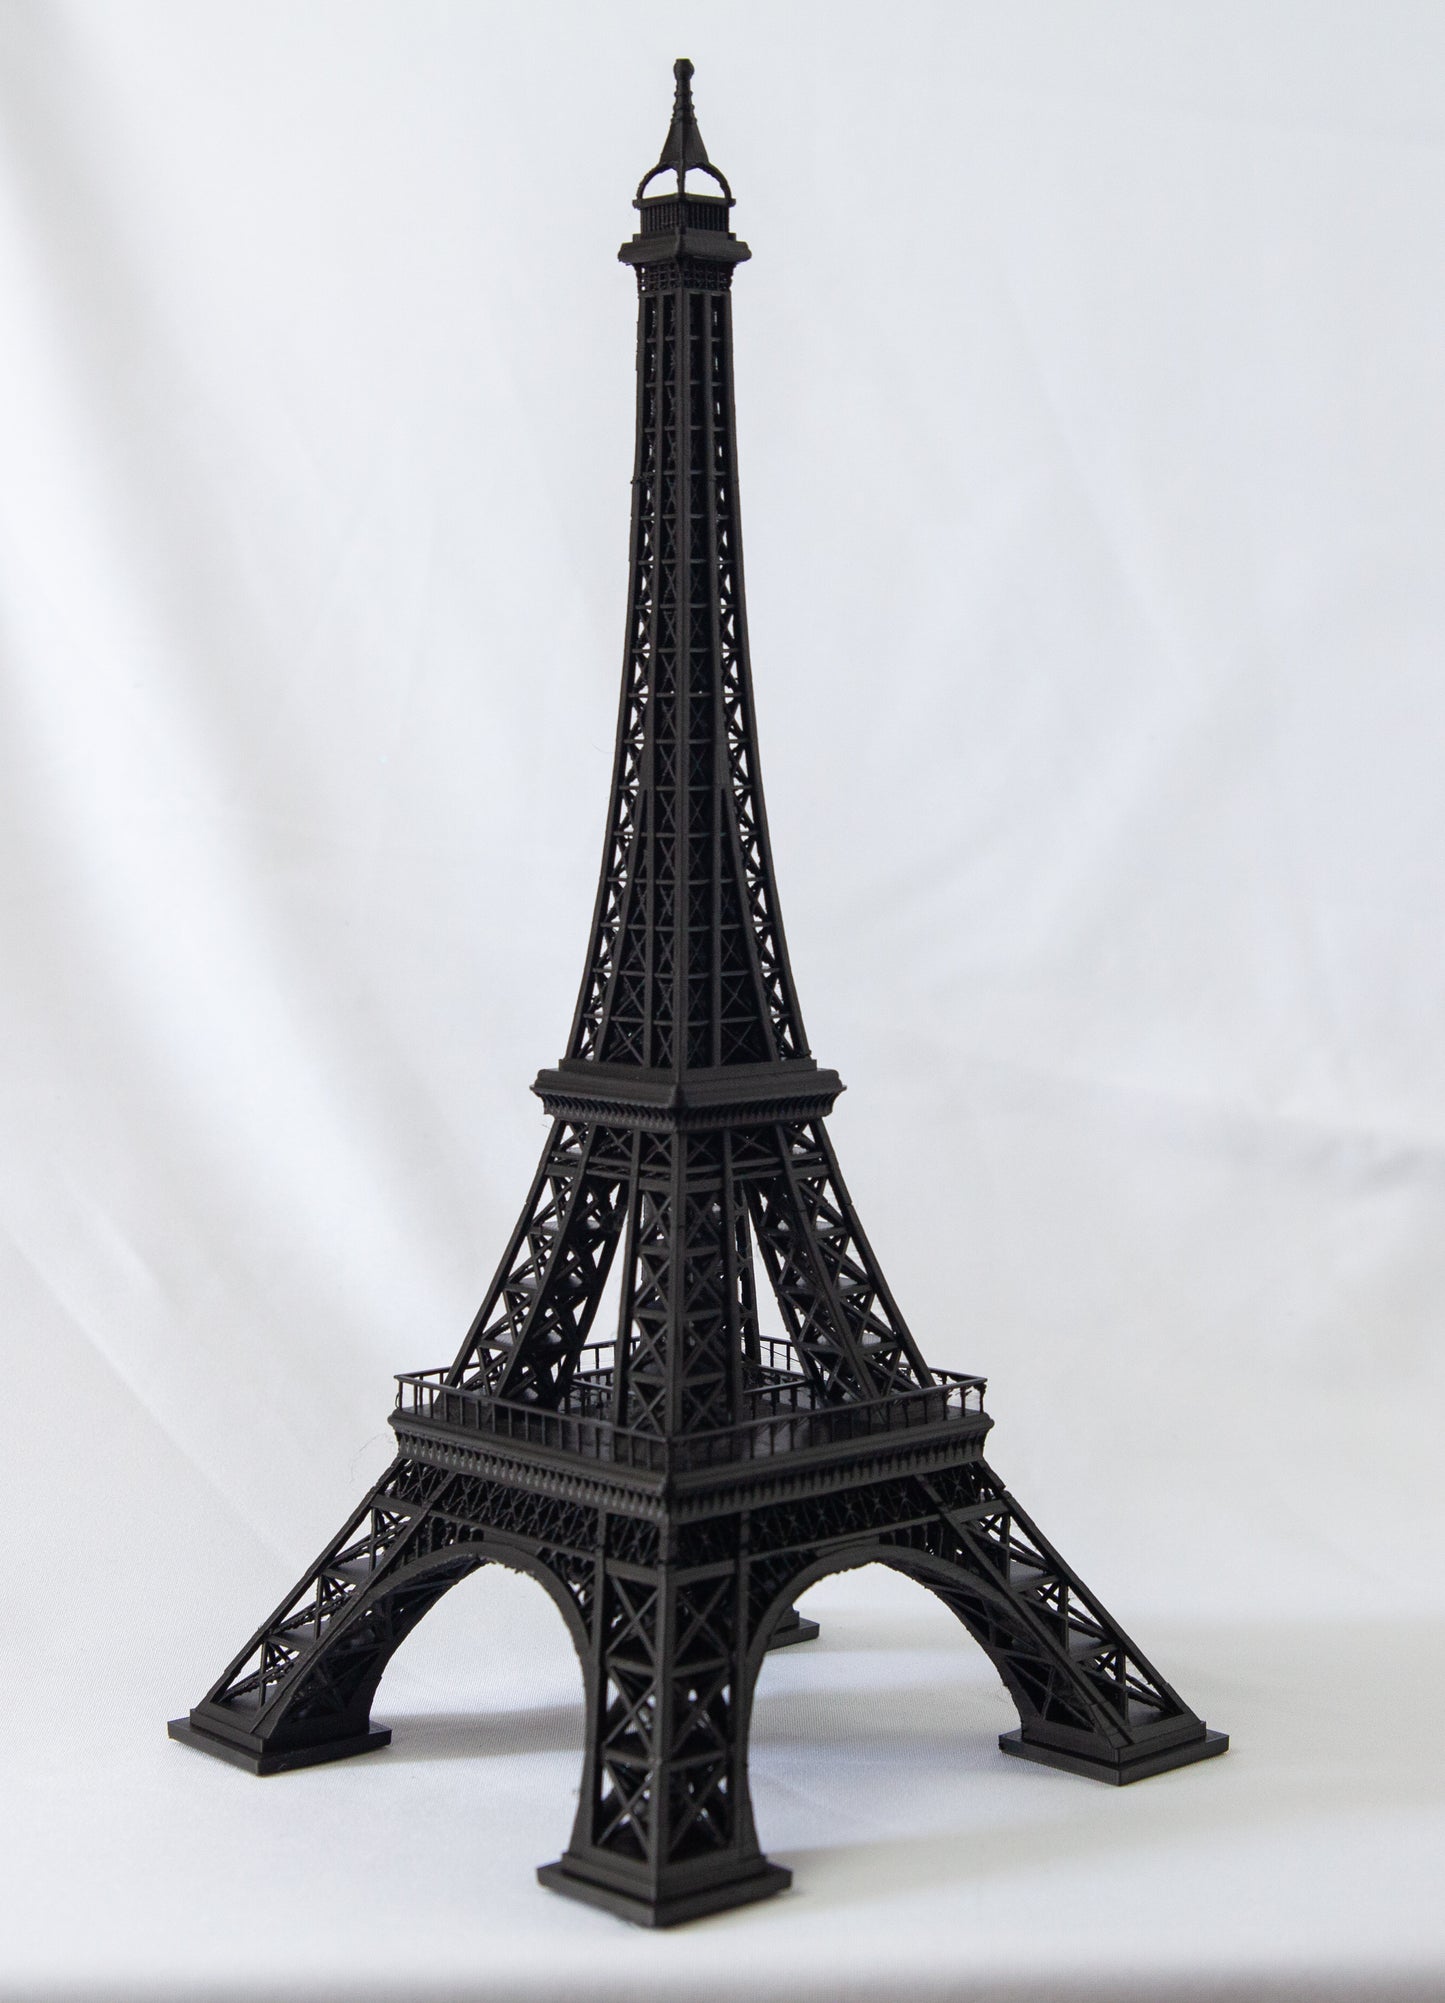 3D Printed Eiffel Tower